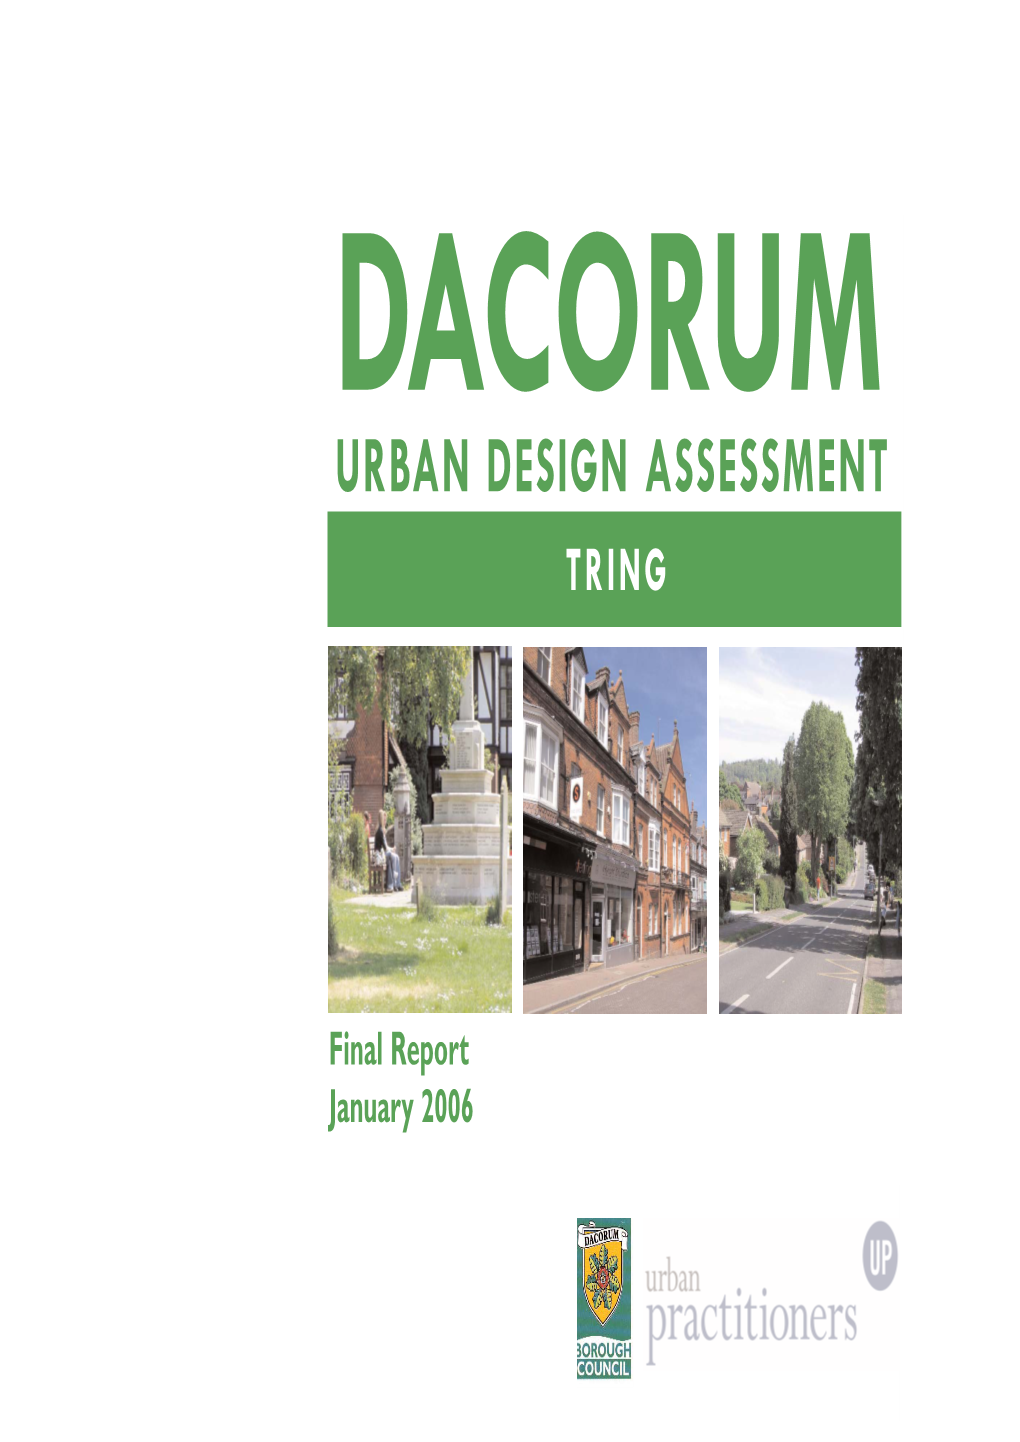 Dacorum Urban Design Assessment Tring